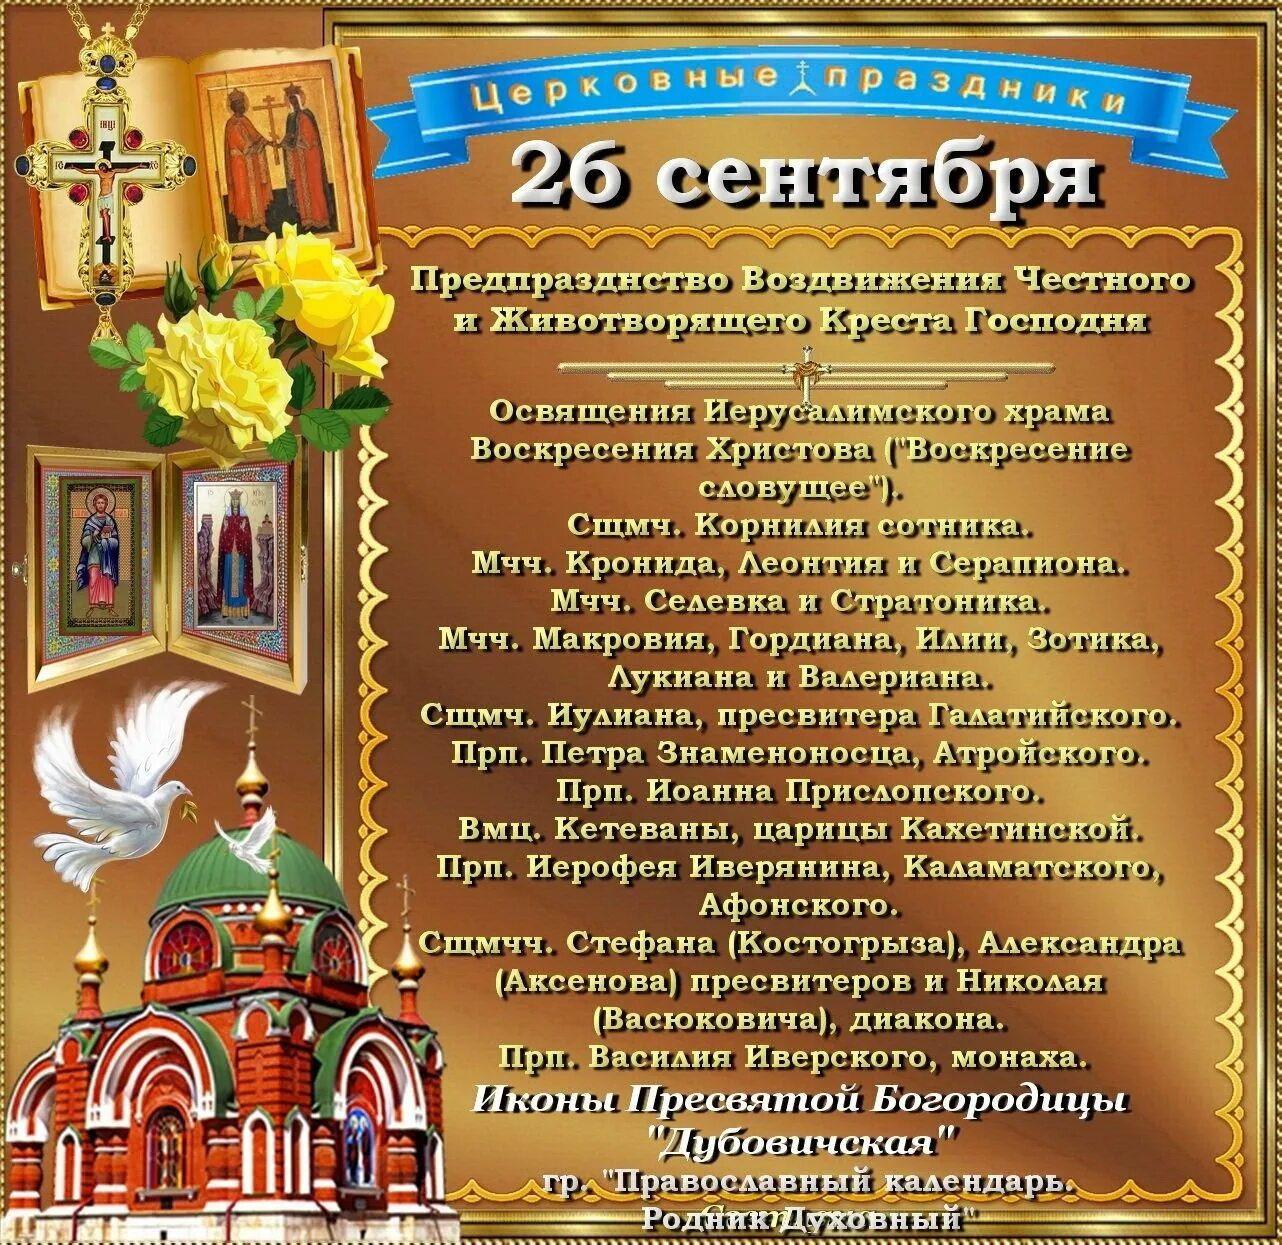 26 Сентября праздник православный. 26 Сентября православный календарь. Православные праздники в сентябре. Божественные праздники в сентябре.